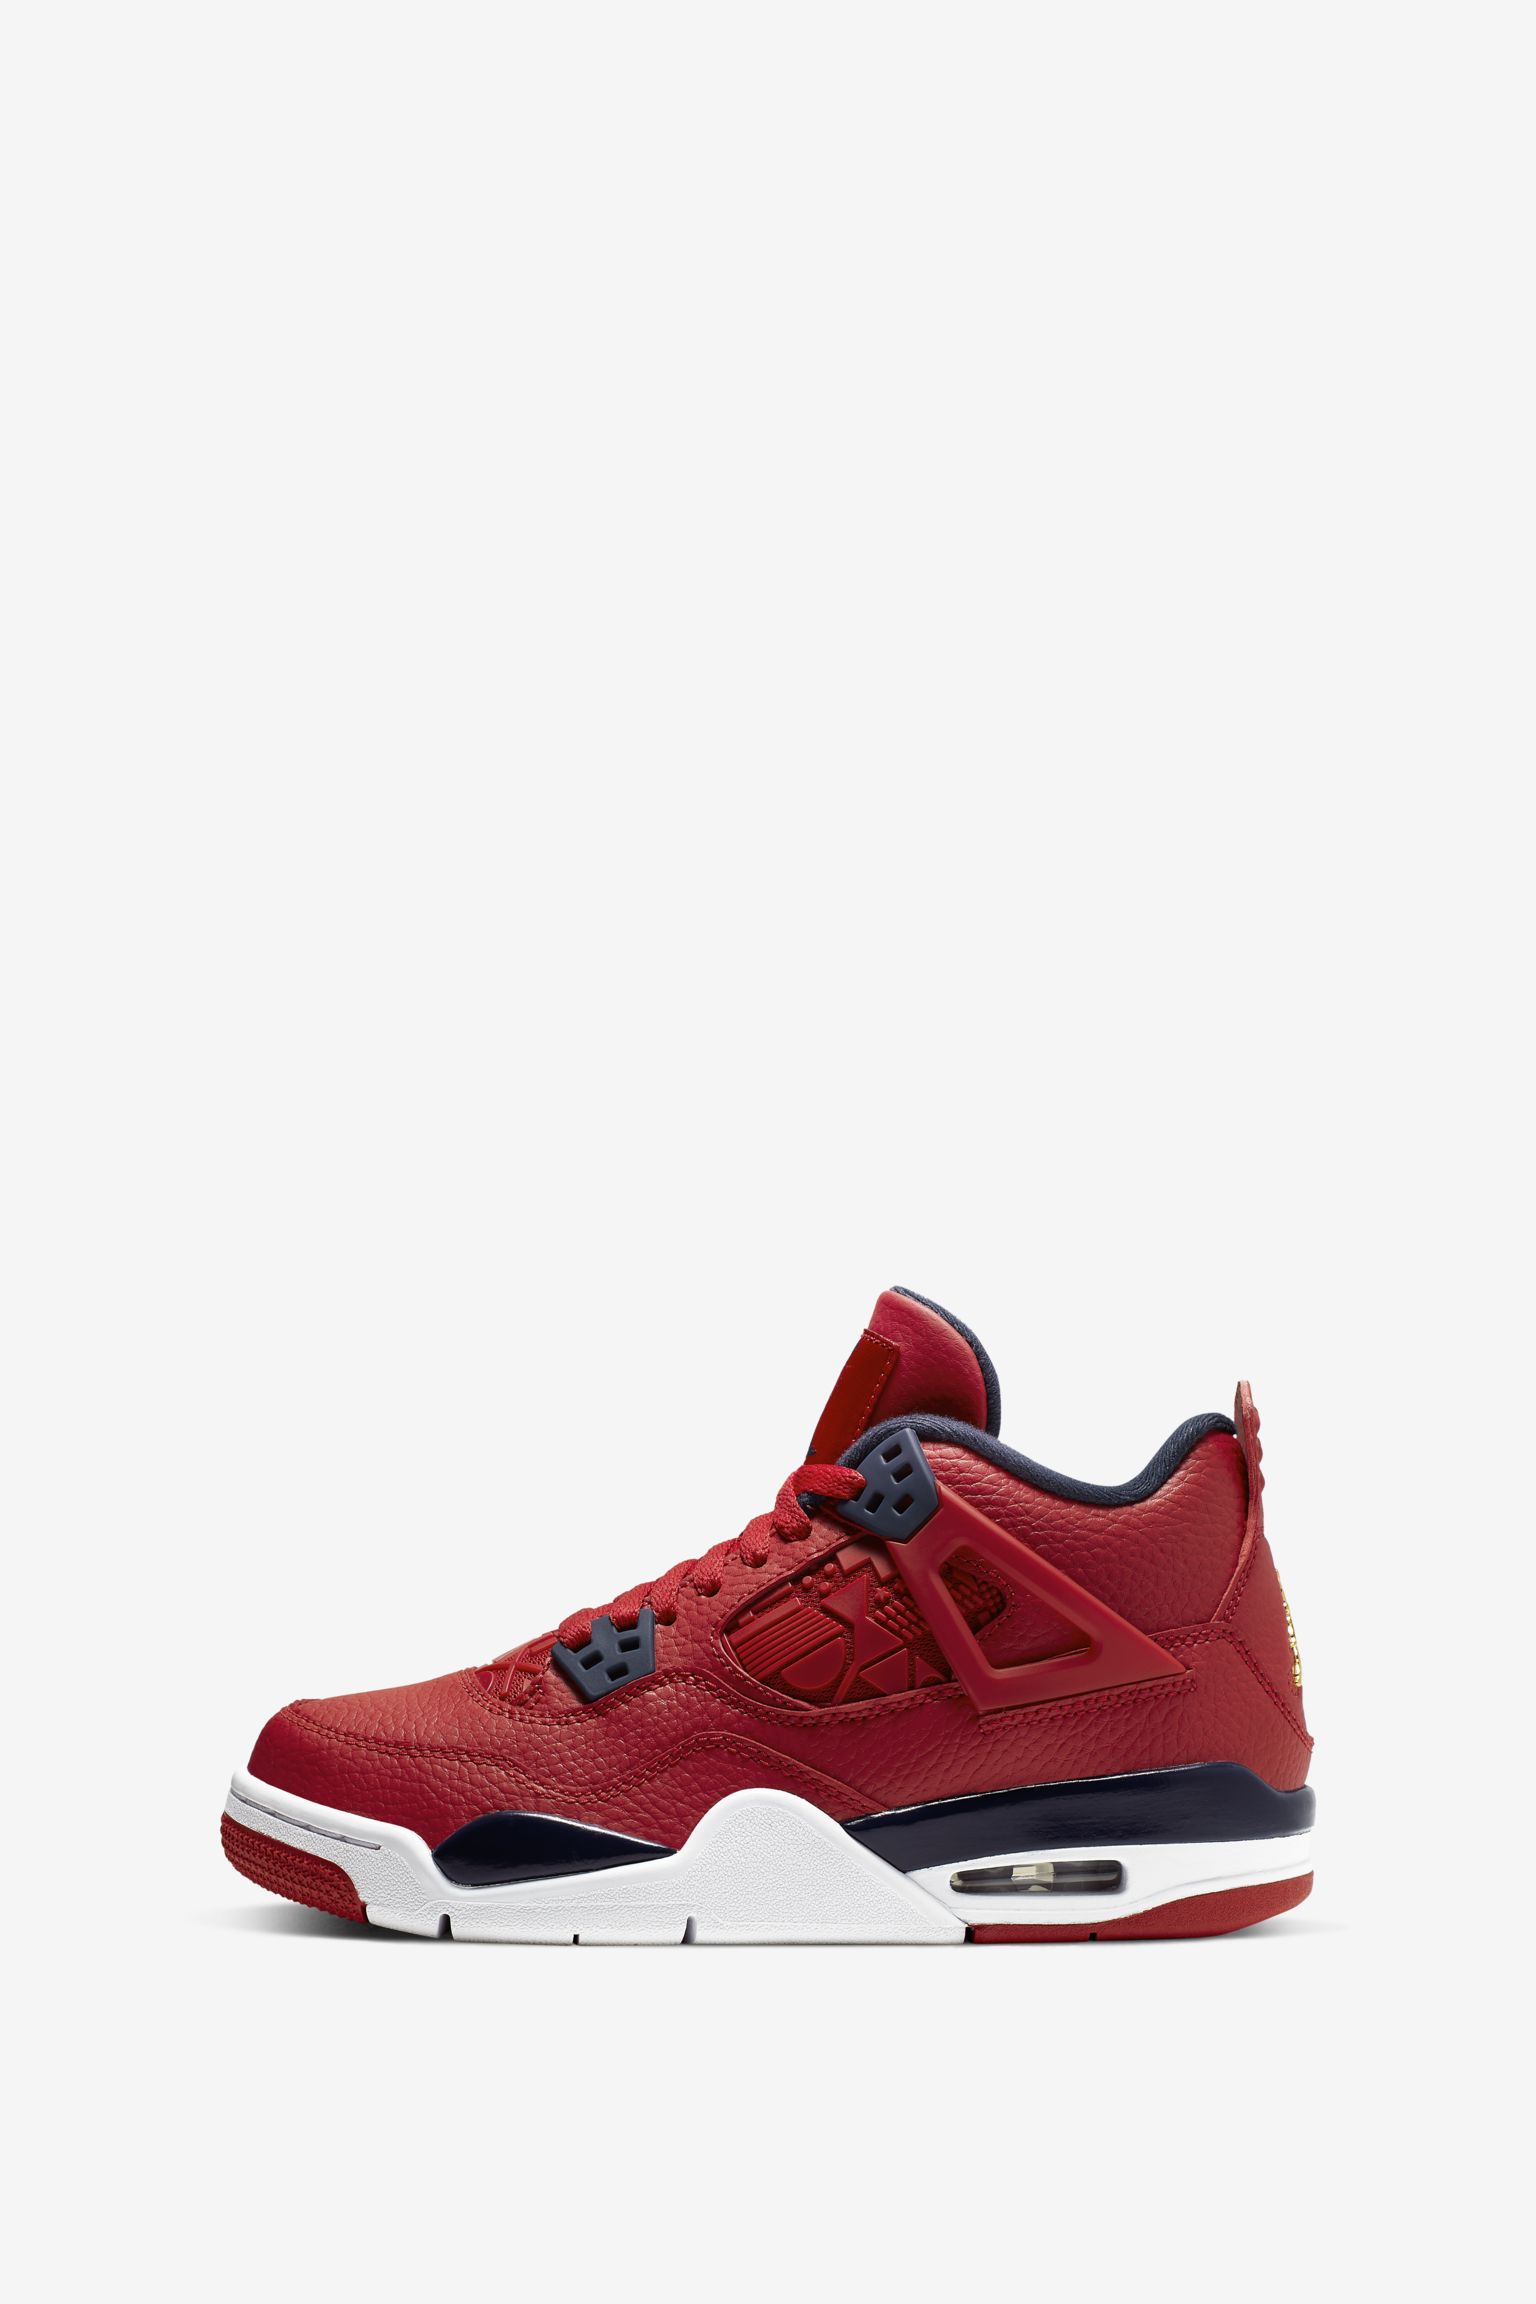 Air Jordan IV Retro 'Gym Red' Release 